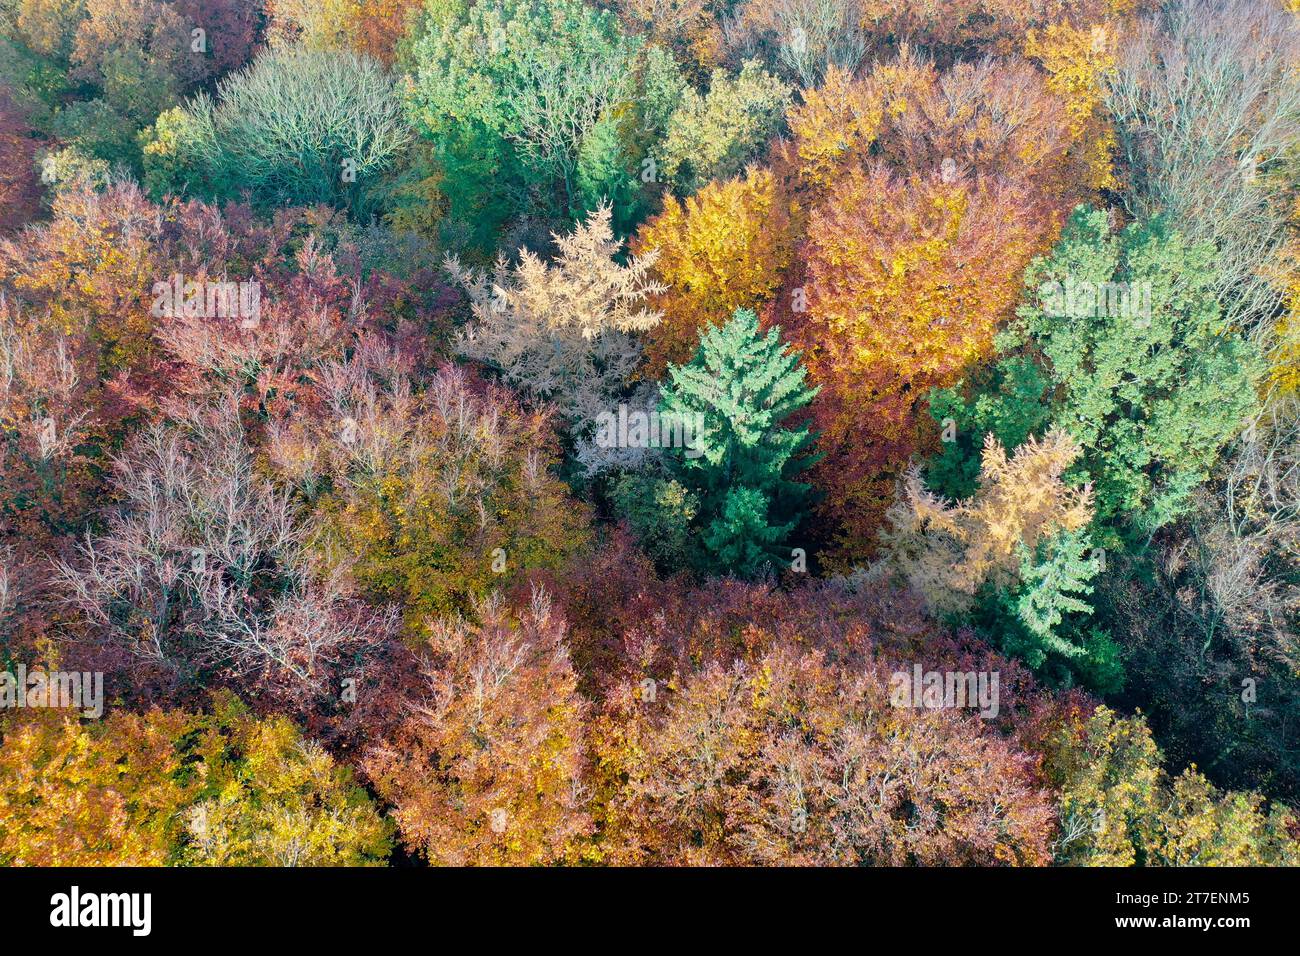 Wald von oben, Herbstwald, Herbstlaub, Herbstfärbung, Herbstverfärbung, Herbstfarben, bunt, buntes Laub, herbstlich, herbstlicher Wald, Luftaufnahme, Stock Photo